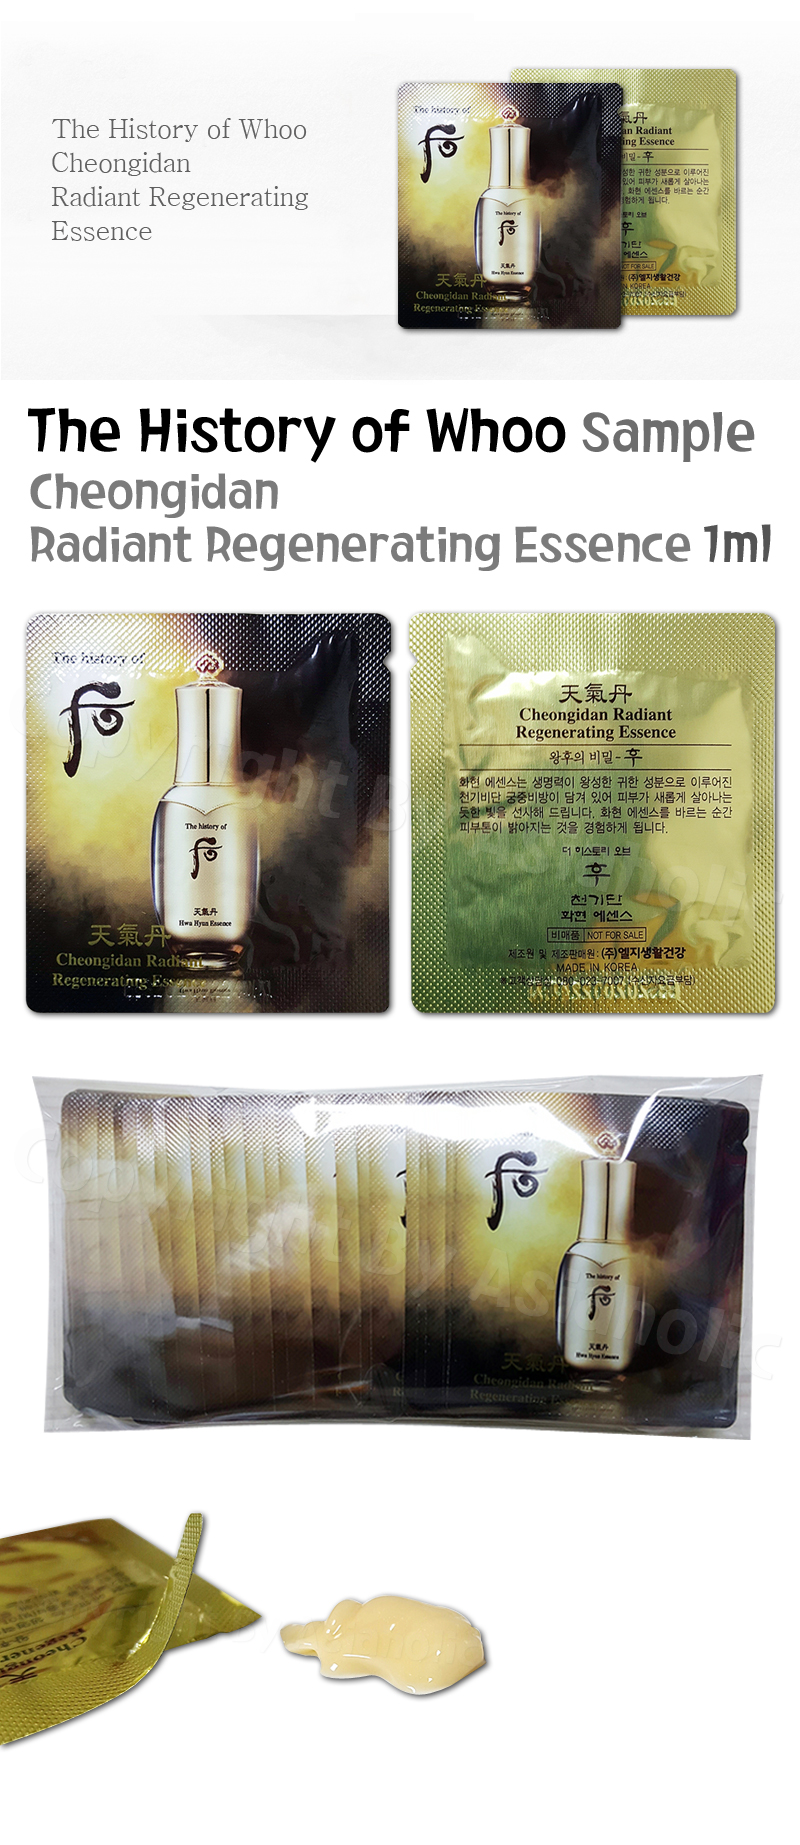 The history of Whoo Radiant Regenerating Essence 1ml x 45pcs (45ml) Sample Newest Version